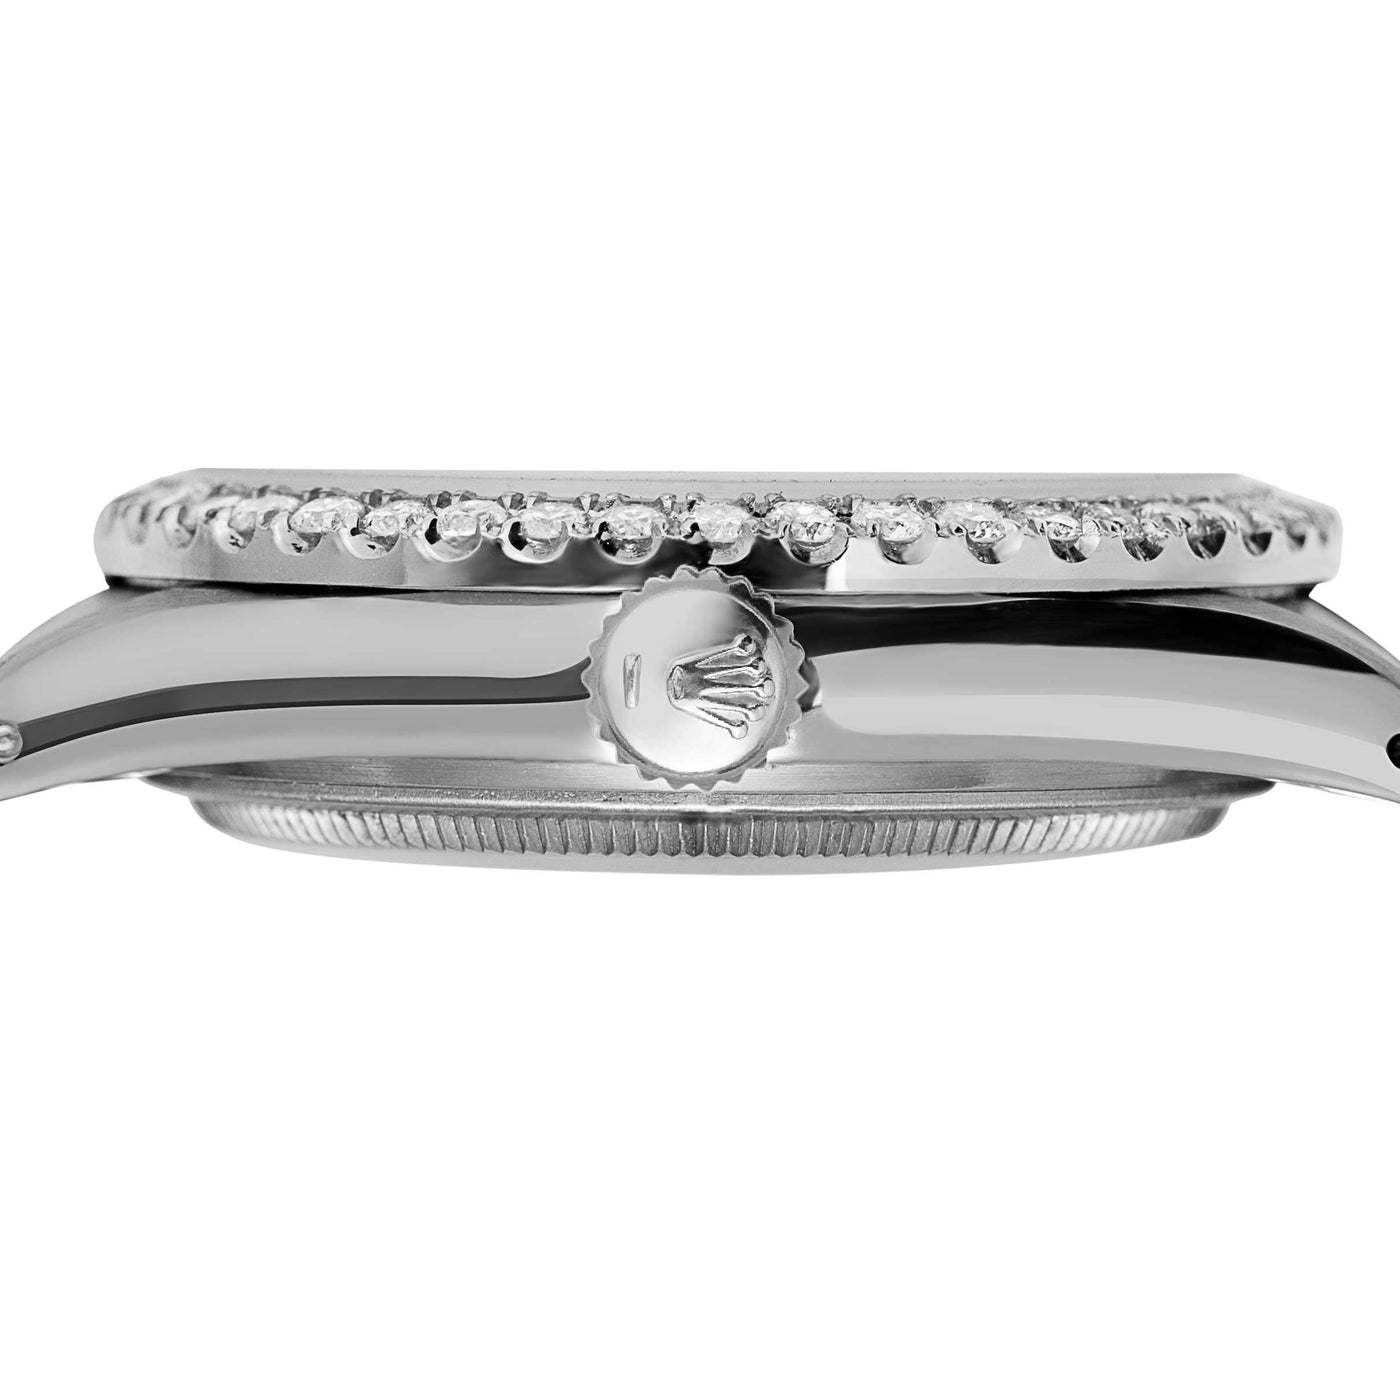 Rolex Datejust Diamond Bezel Watch 36mm Mother of Pearl Roman Dial | 1.25ct